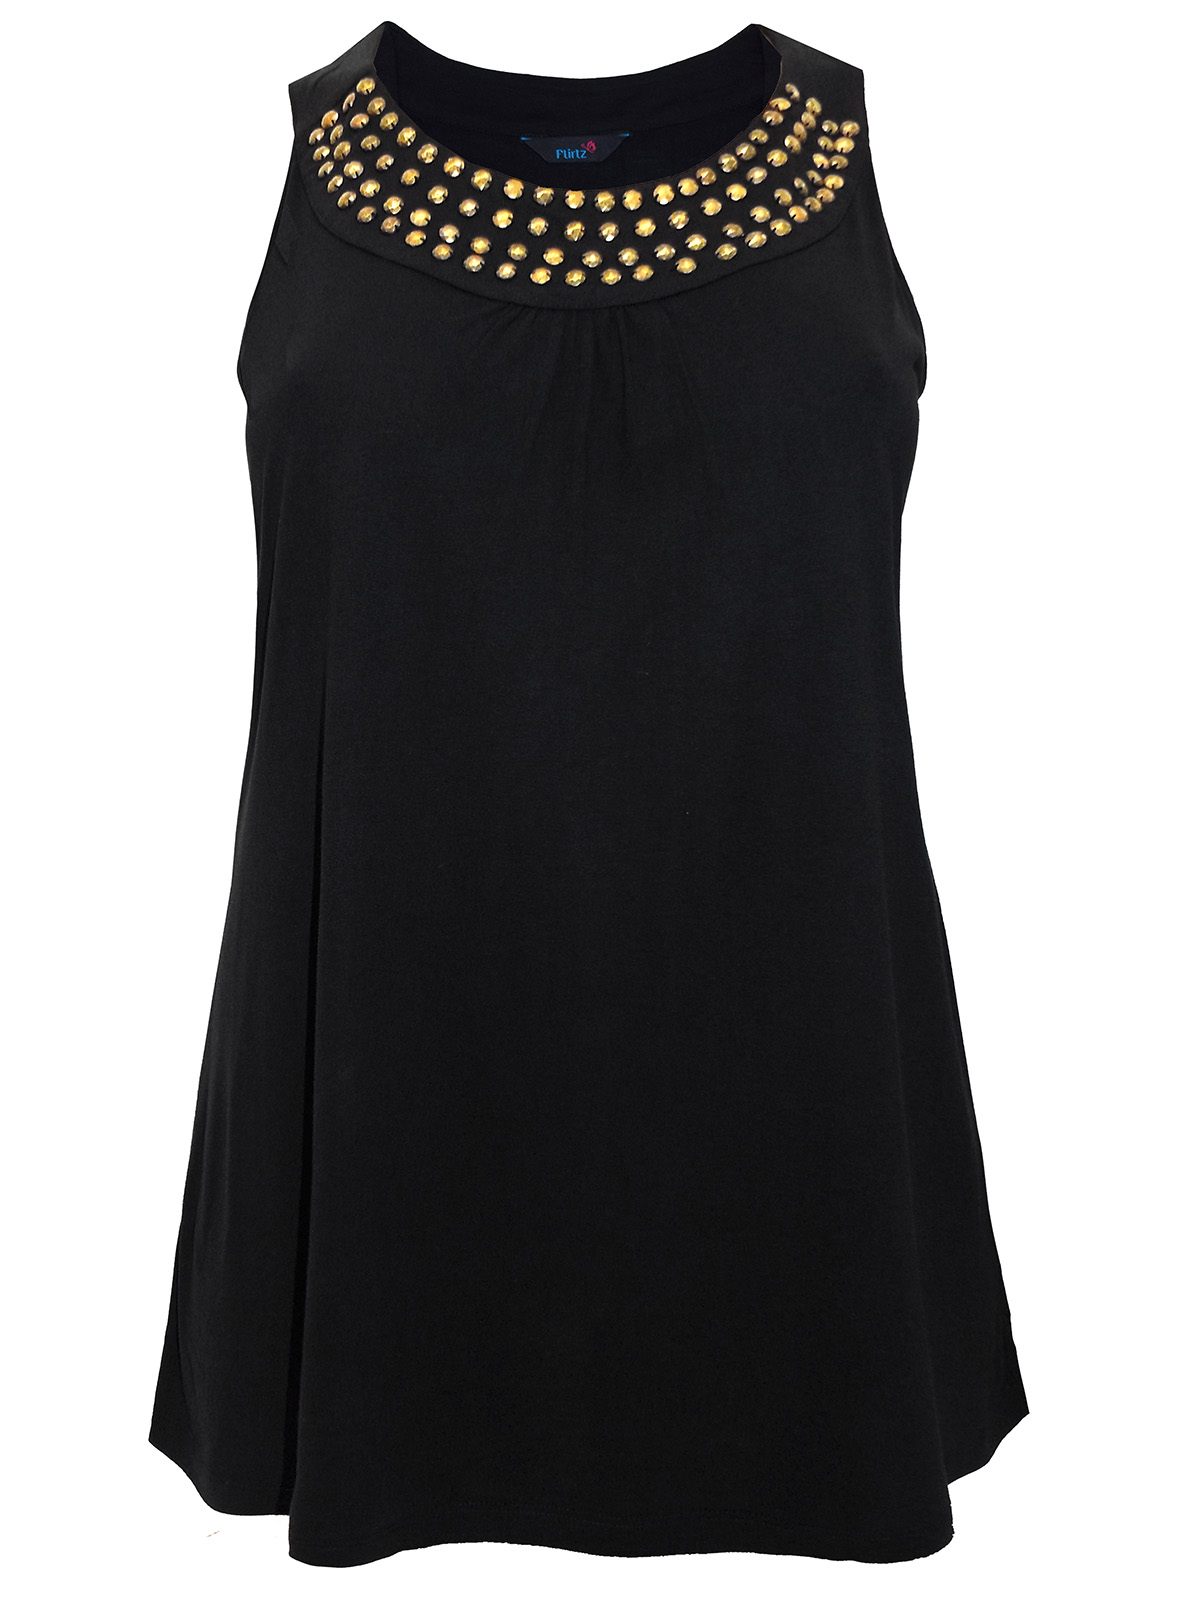 Flirtz - - Flirtz BLACK Sleeveless Studded Vest Top - Plus Size 16 to 30/32